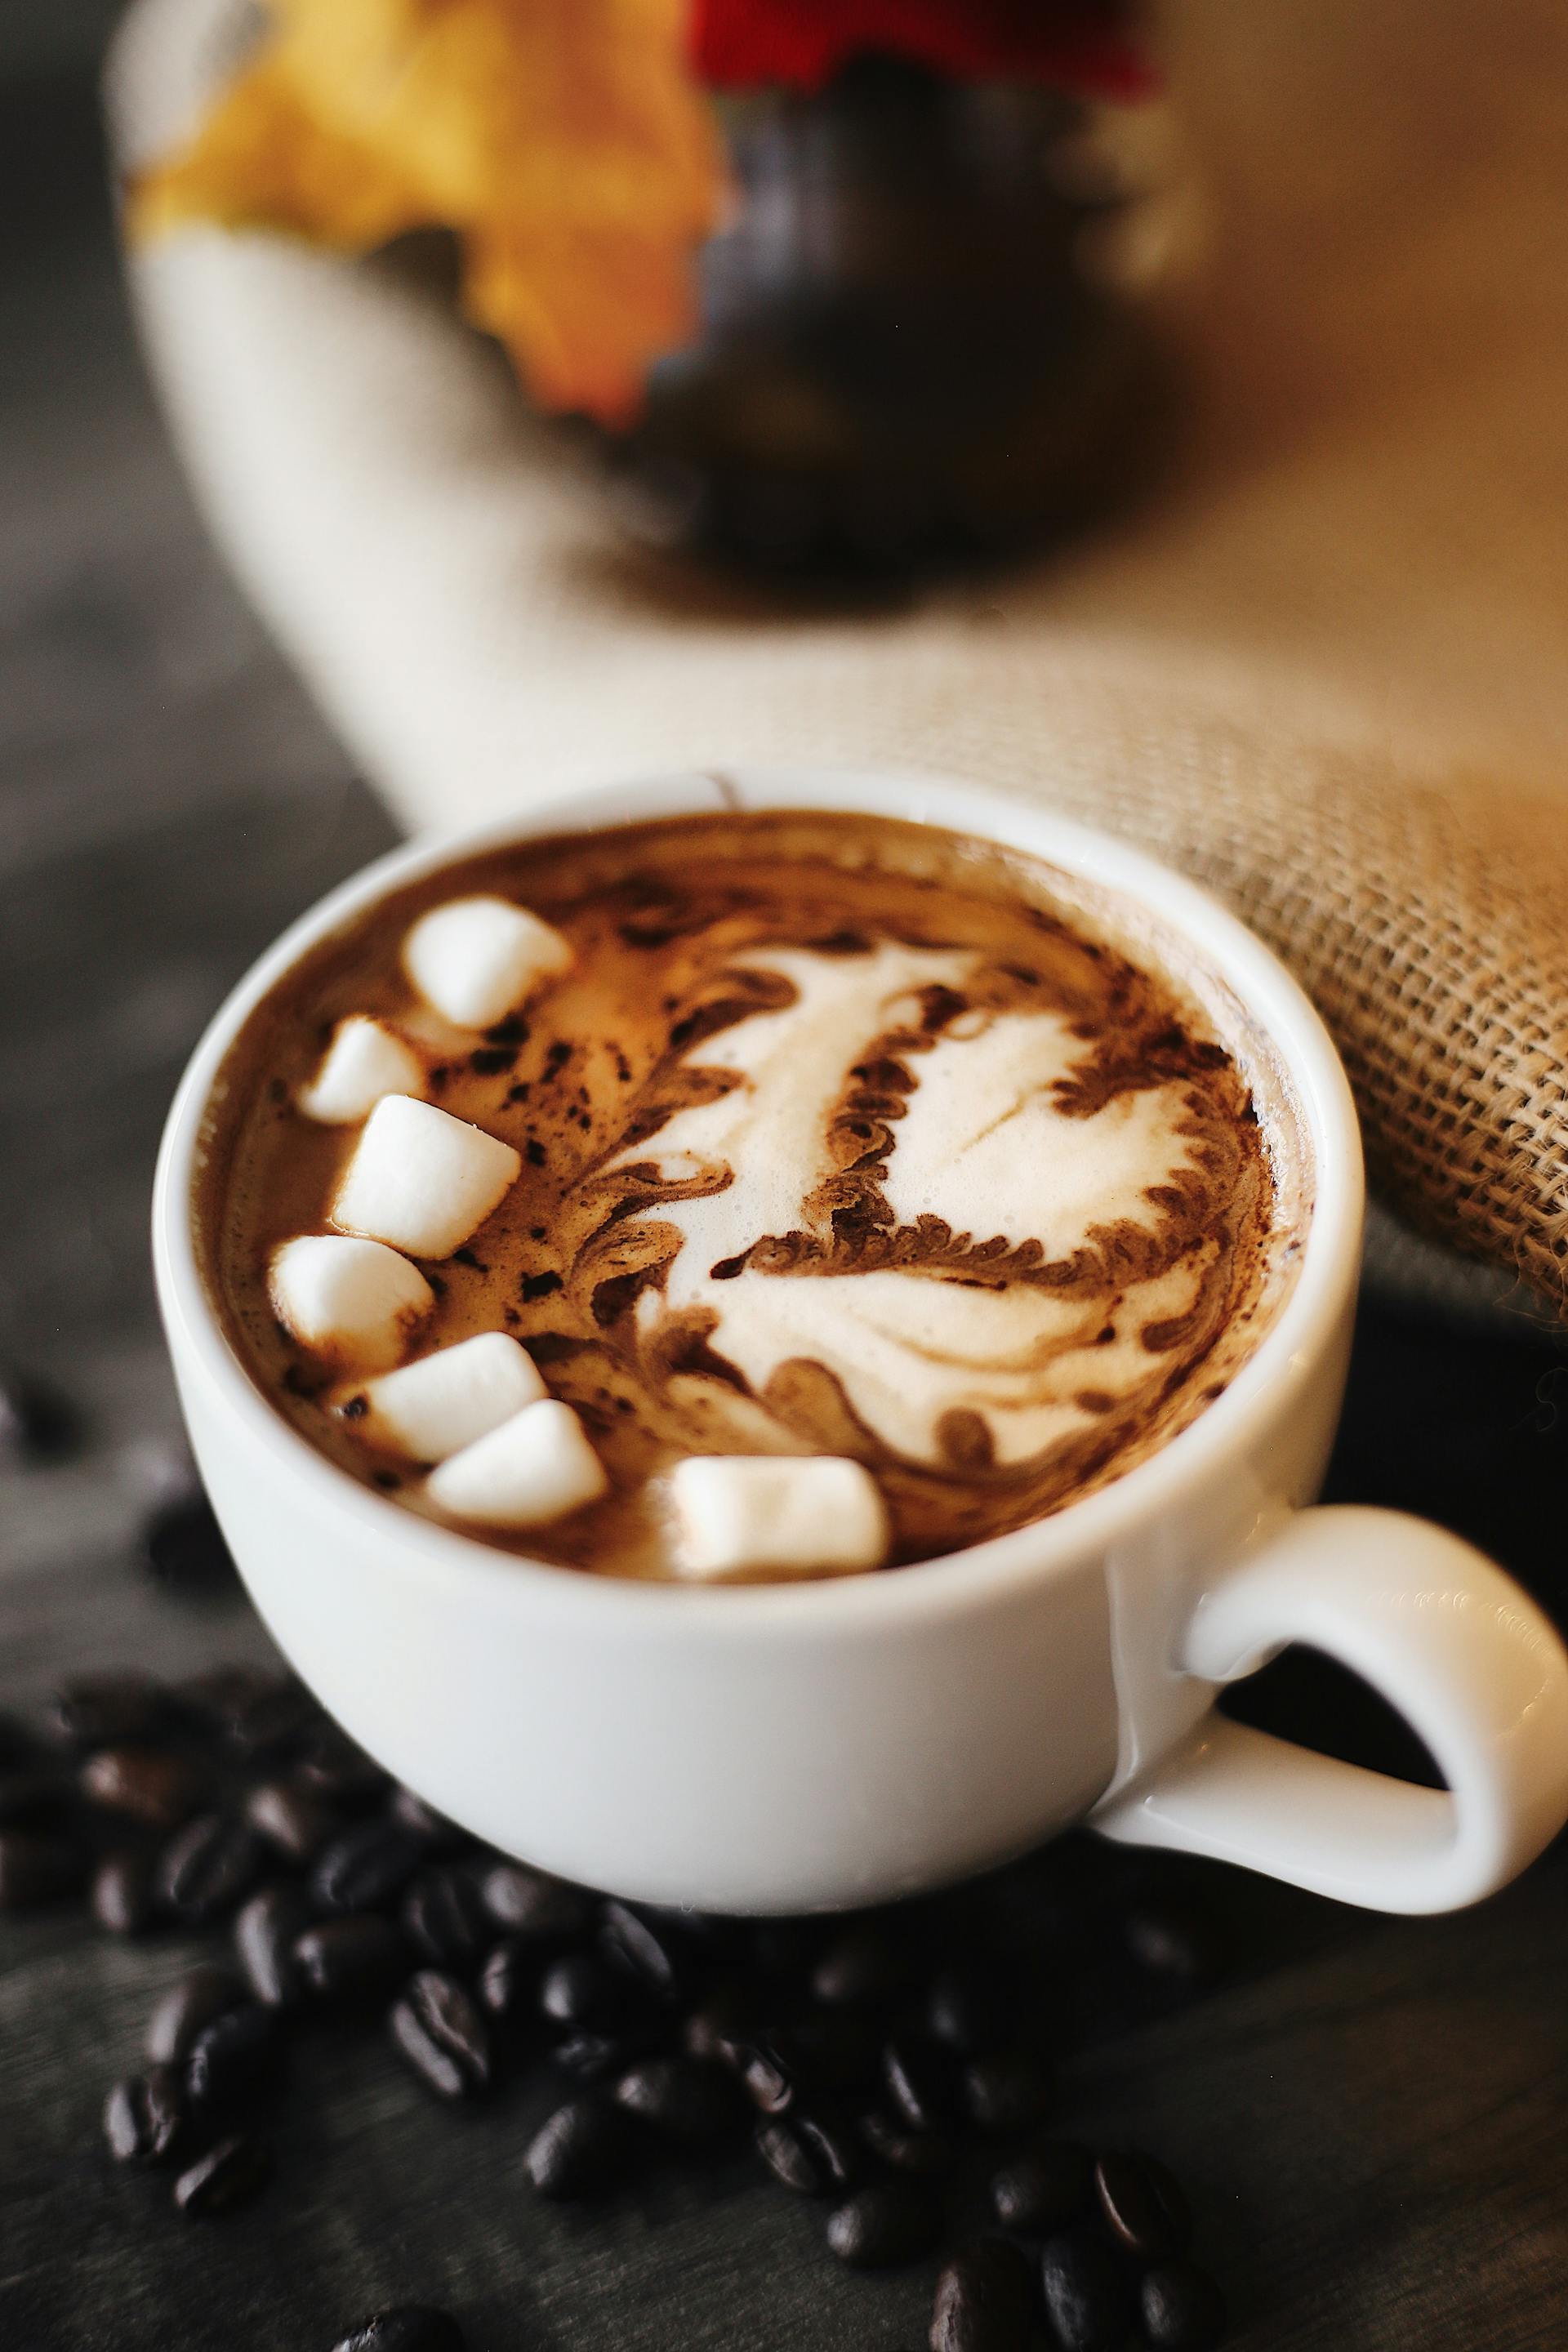 Une tasse de chocolat chaud | Source : Pexels